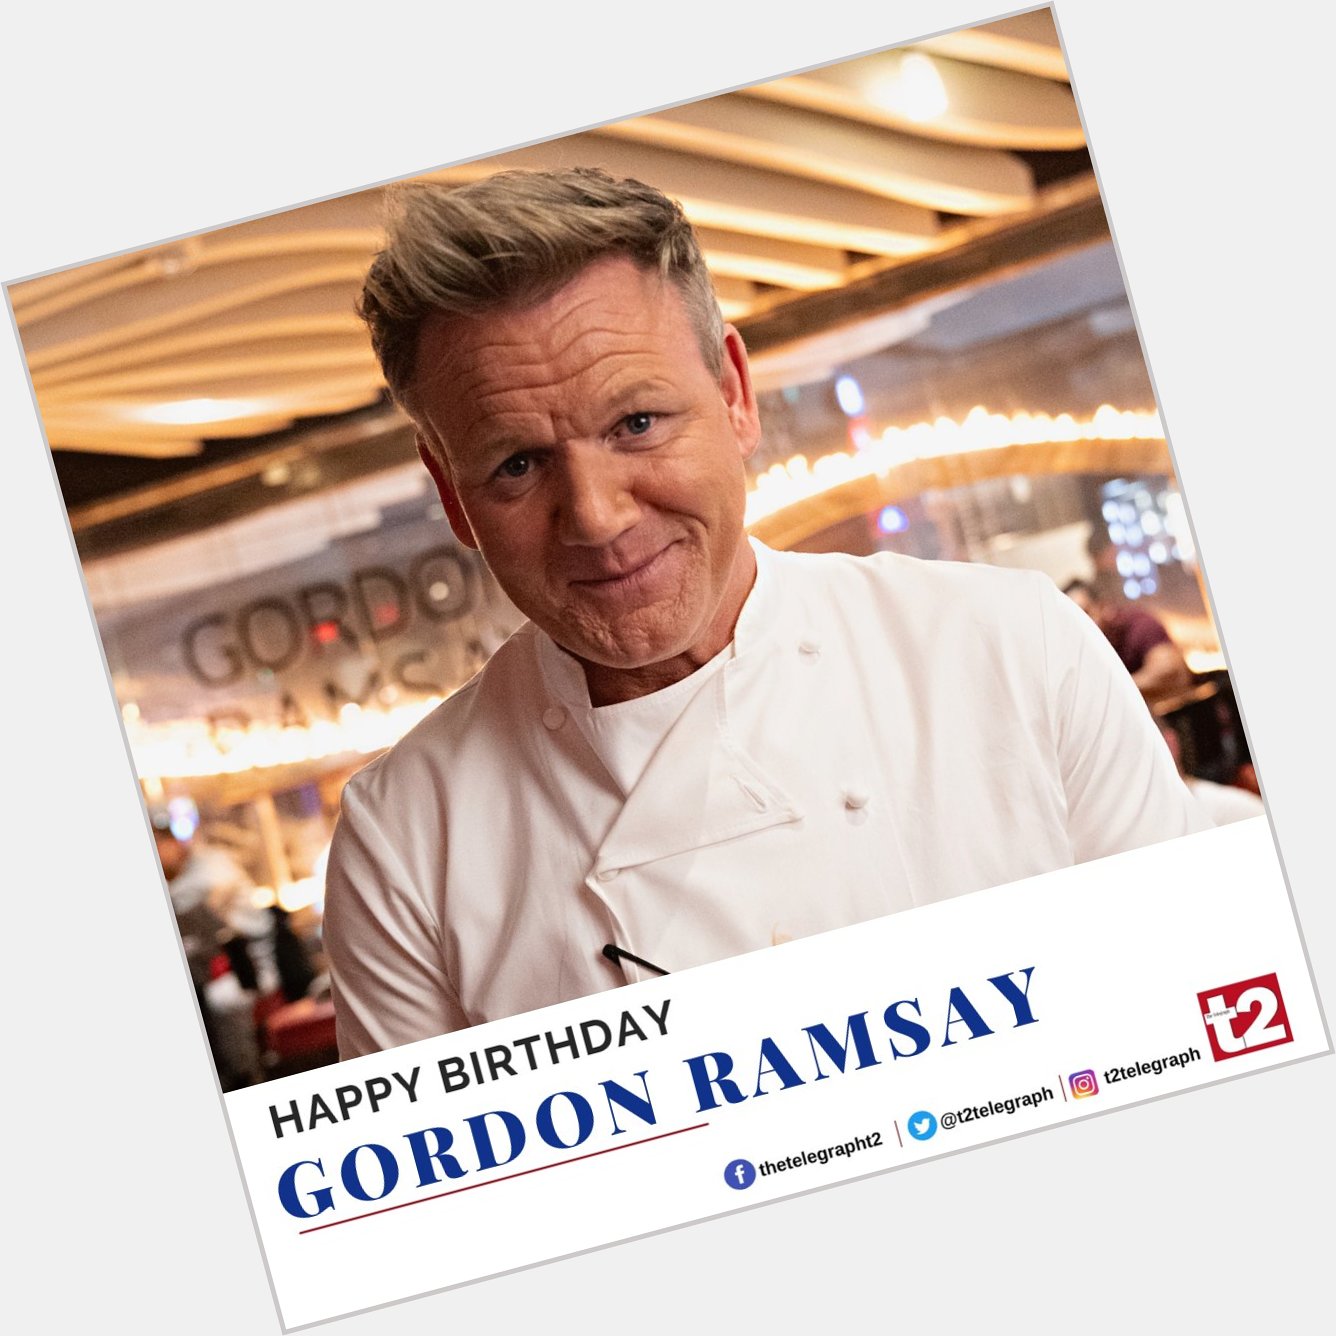 Happy birthday Gordon Ramsay, the celebrity chef who always speaks his mind 